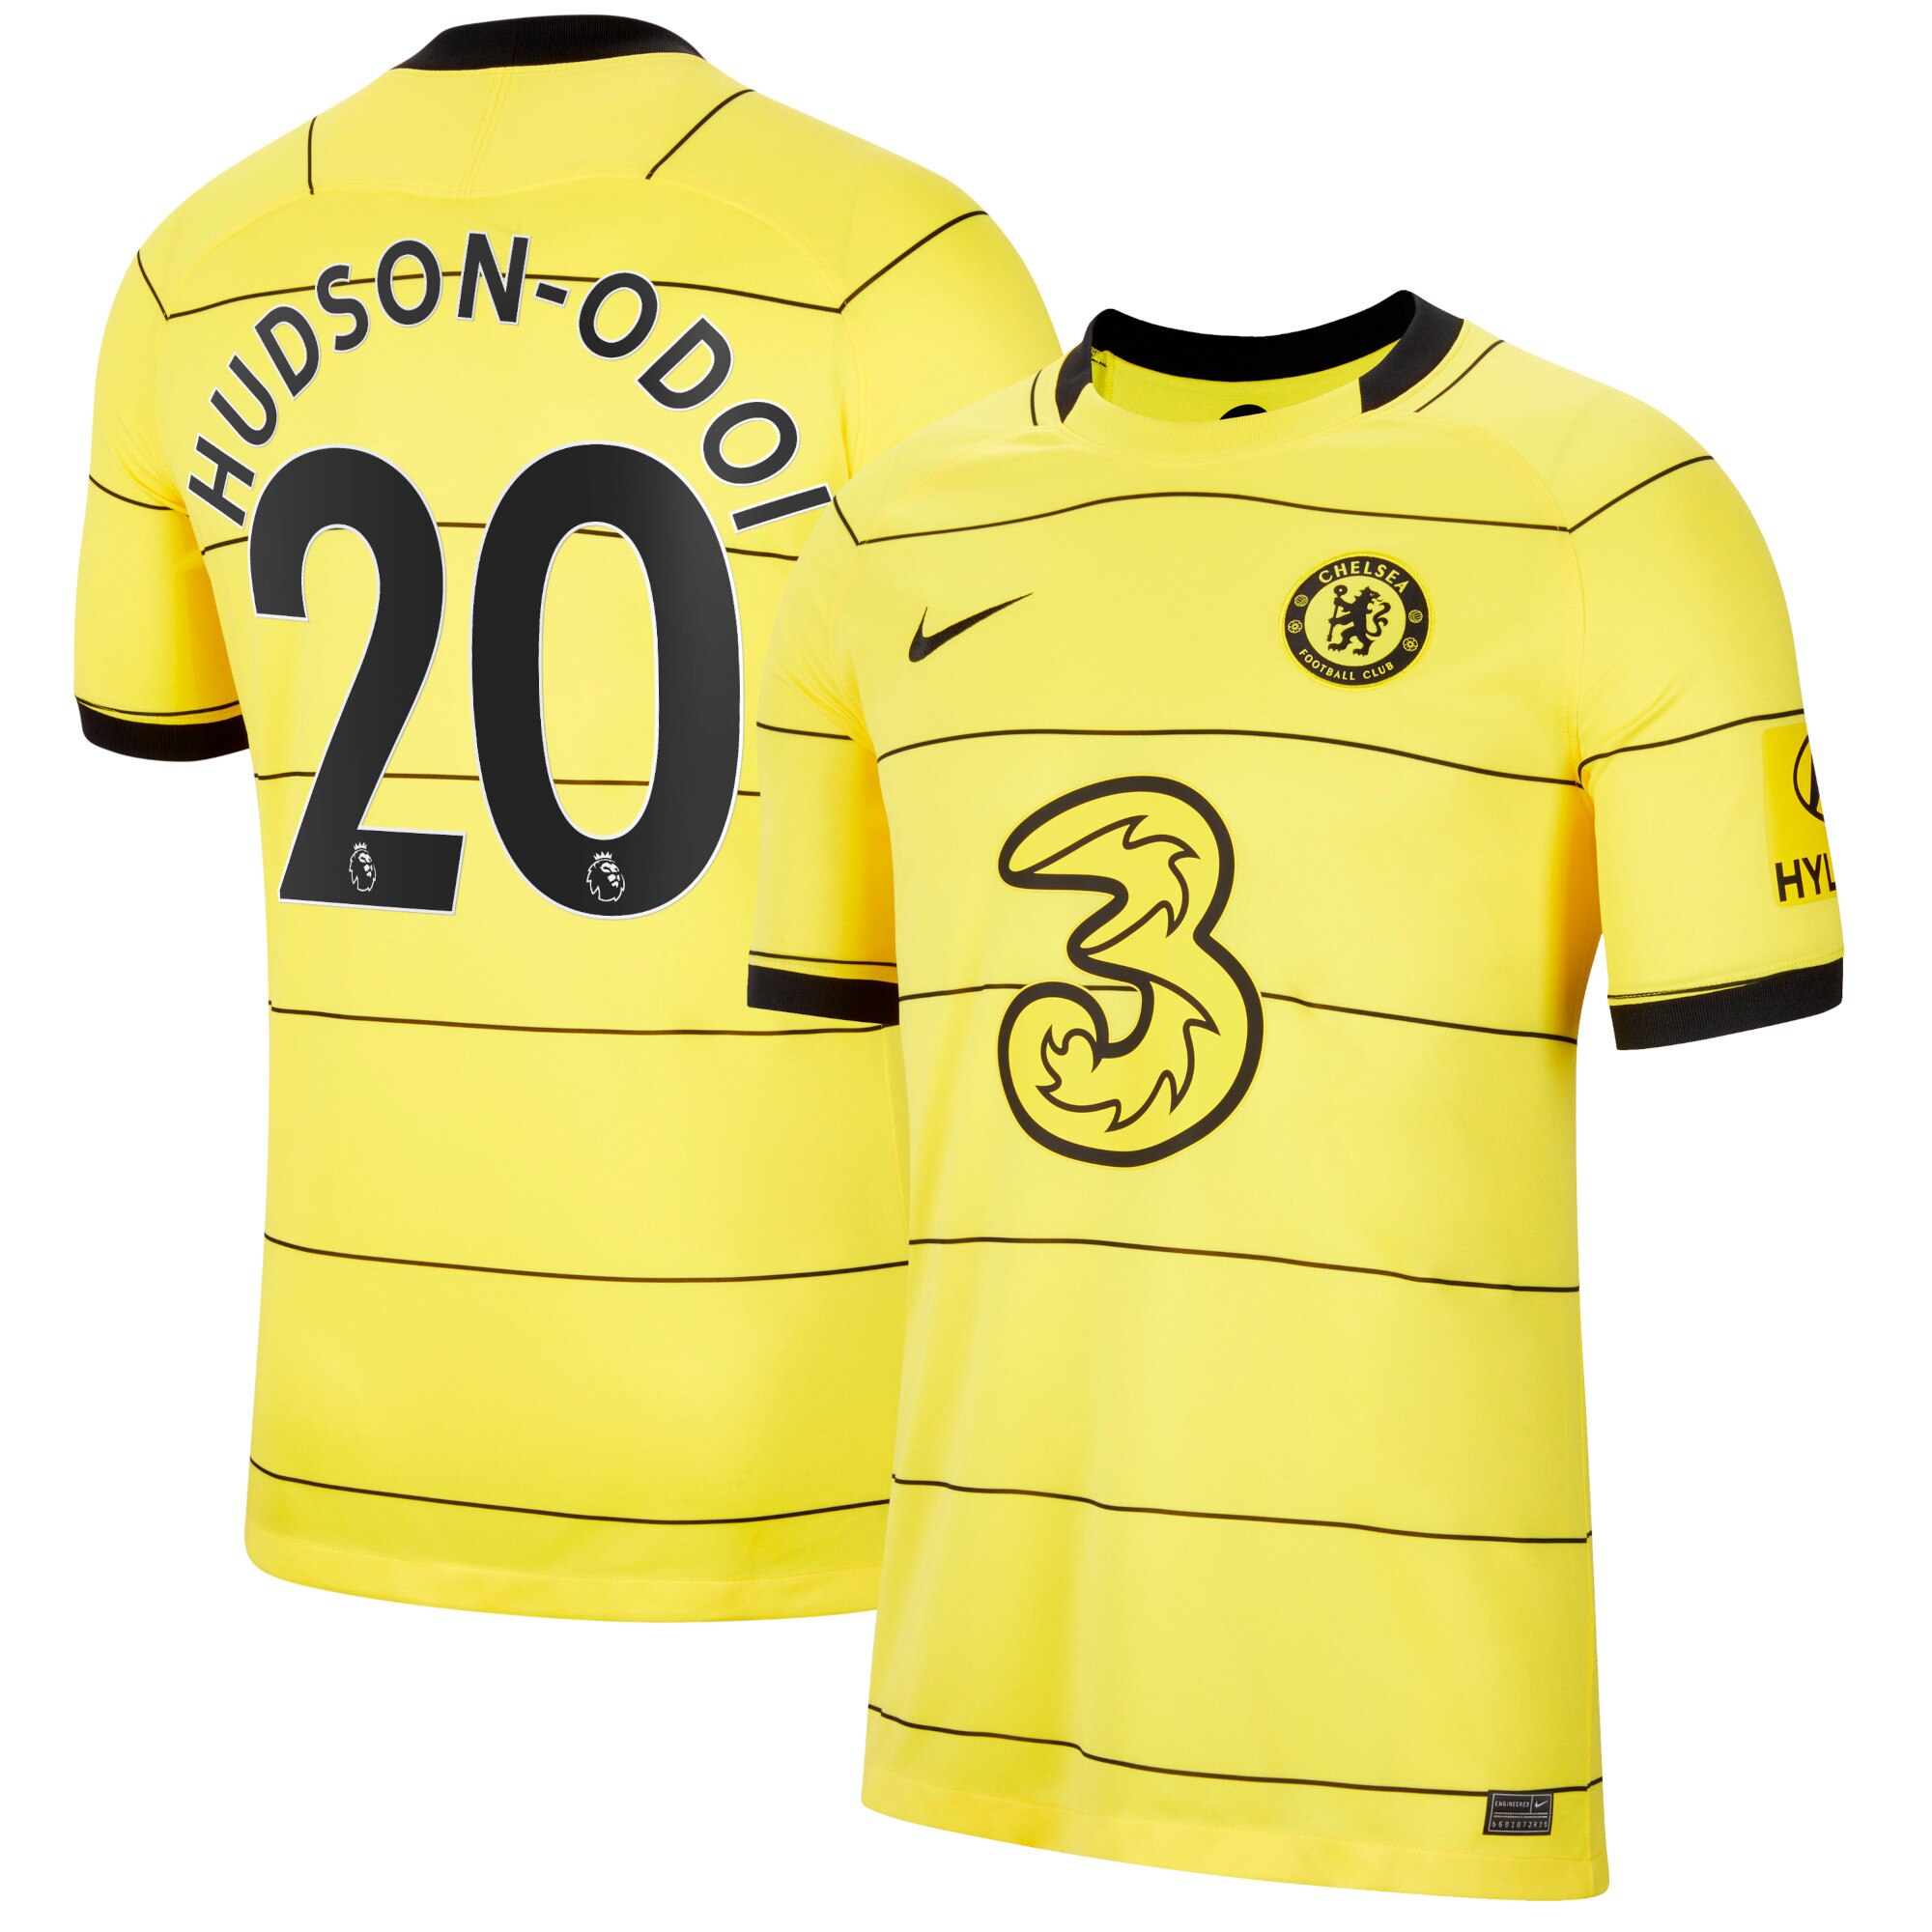 Chelsea Away Stadium Shirt 2021-22 with Hudson-Odoi 20 printing